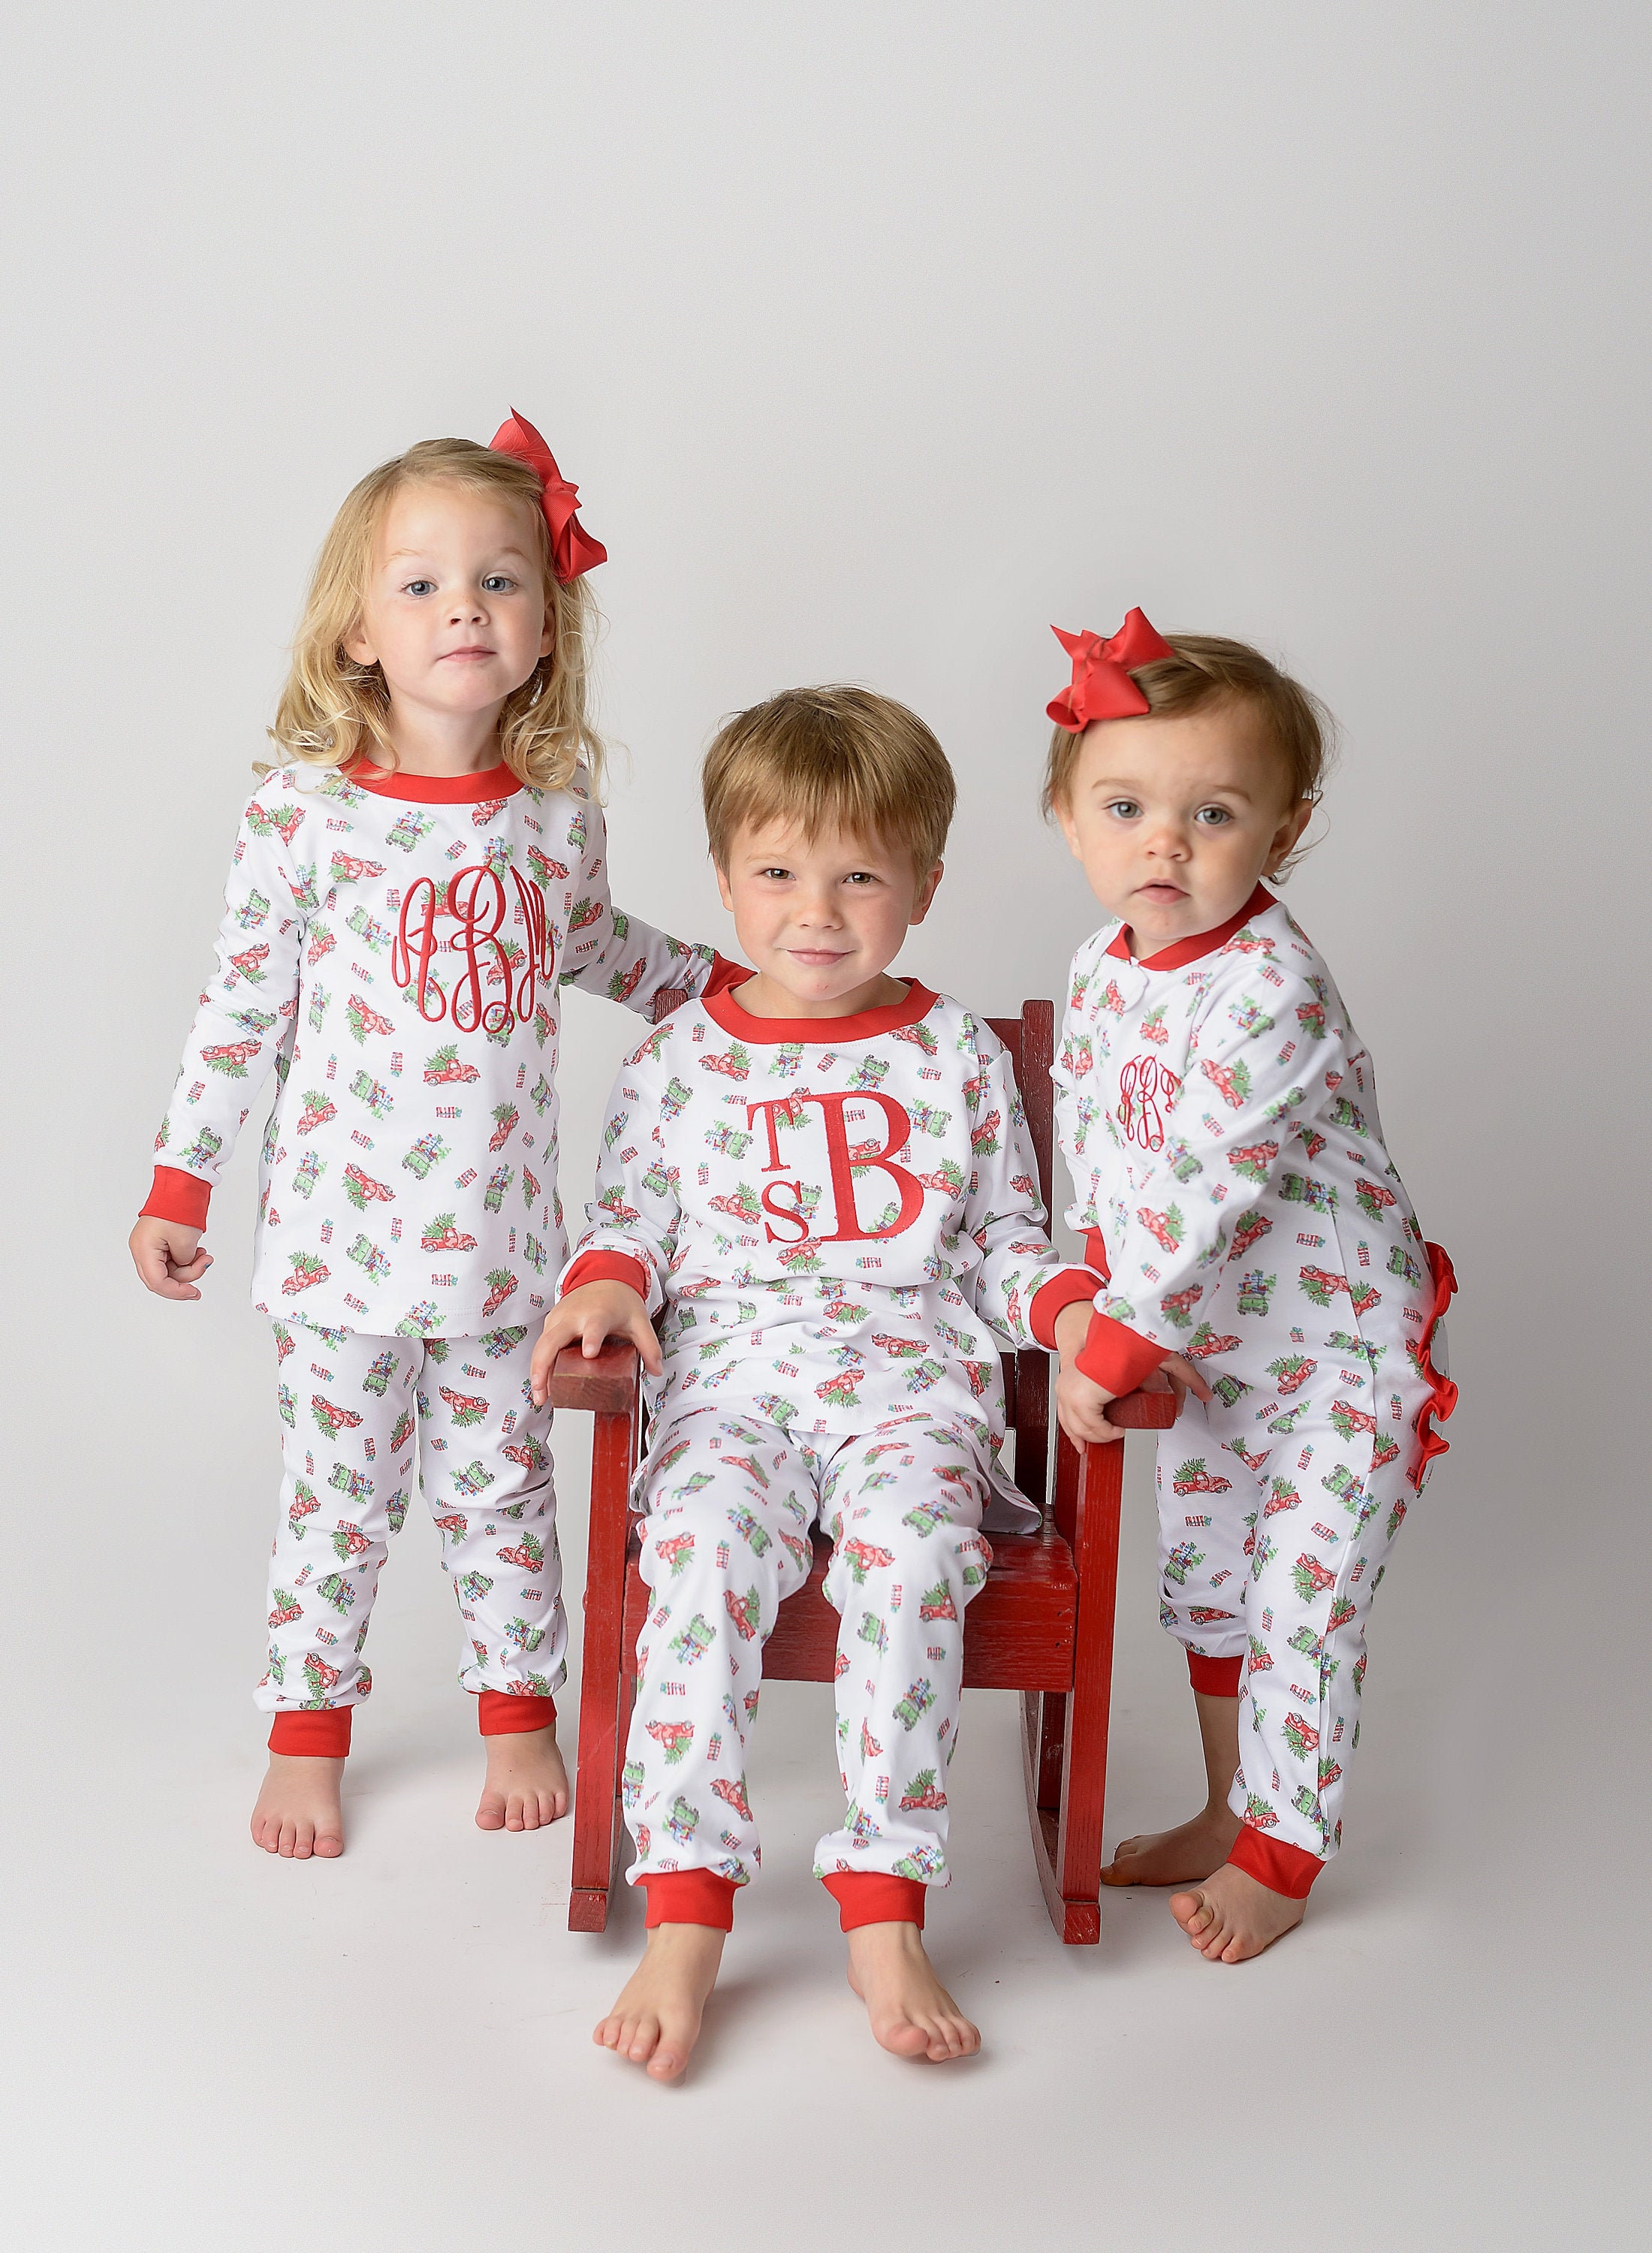 Meijunter Children Boys Girls Christmas Printing Sleepwear Famliy Cotton Pajamas